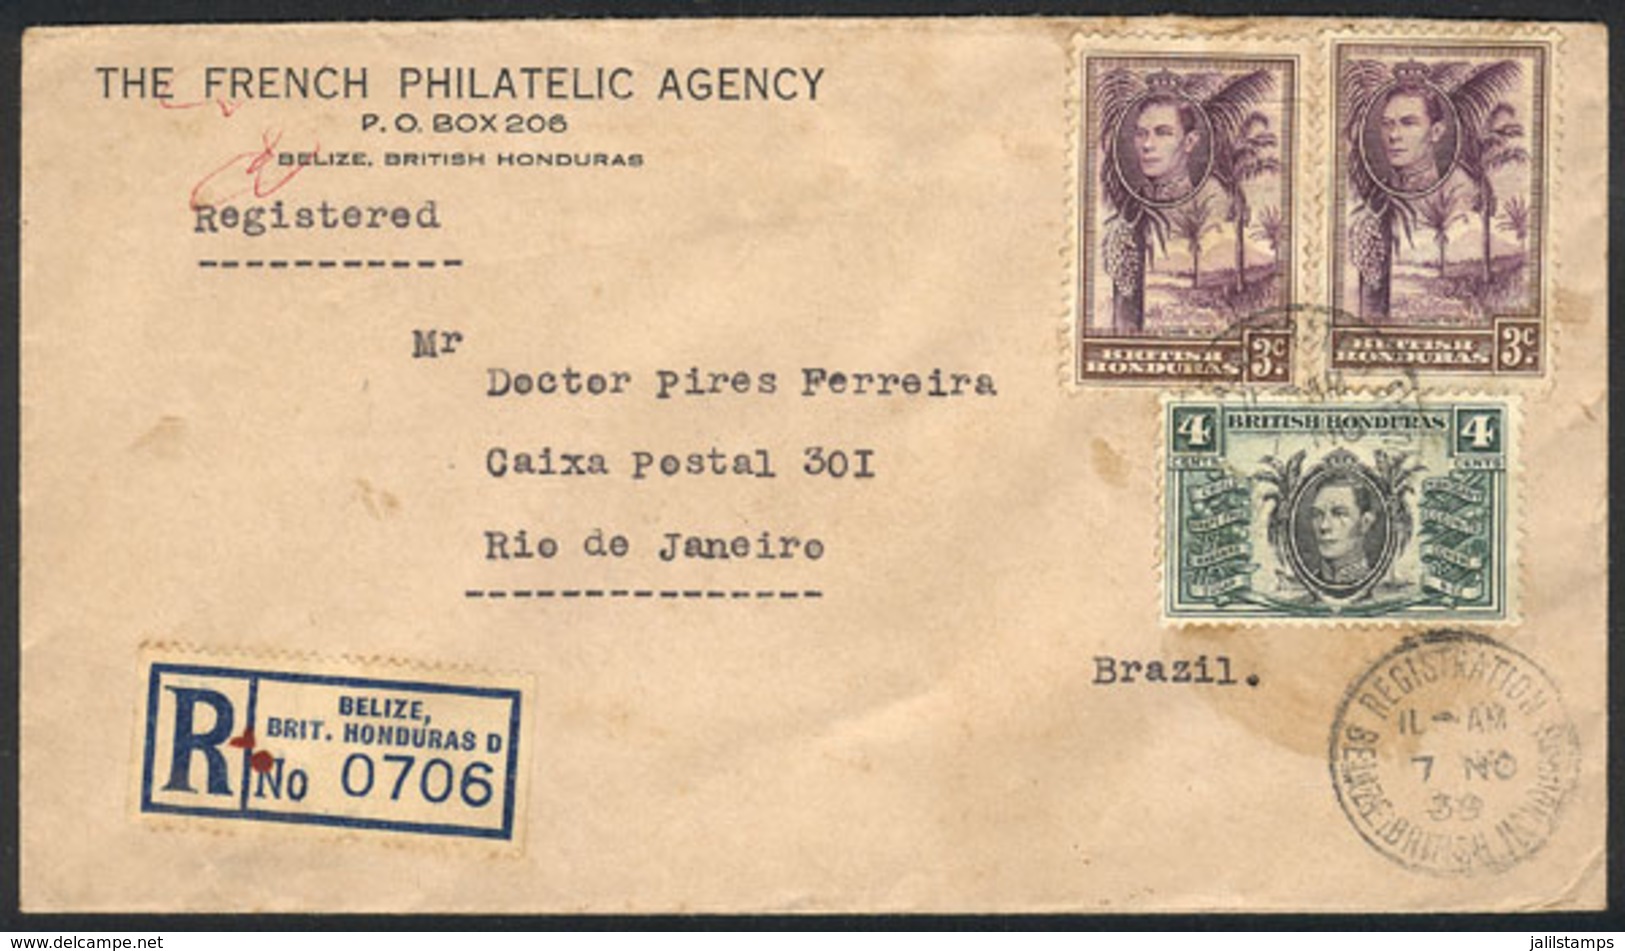 BRITISH HONDURAS: Registered Cover Sent From Belize To Brazil On 7/NO/1939 Franked With 10c., VF Quality, Rare Destinati - Britisch-Honduras (...-1970)